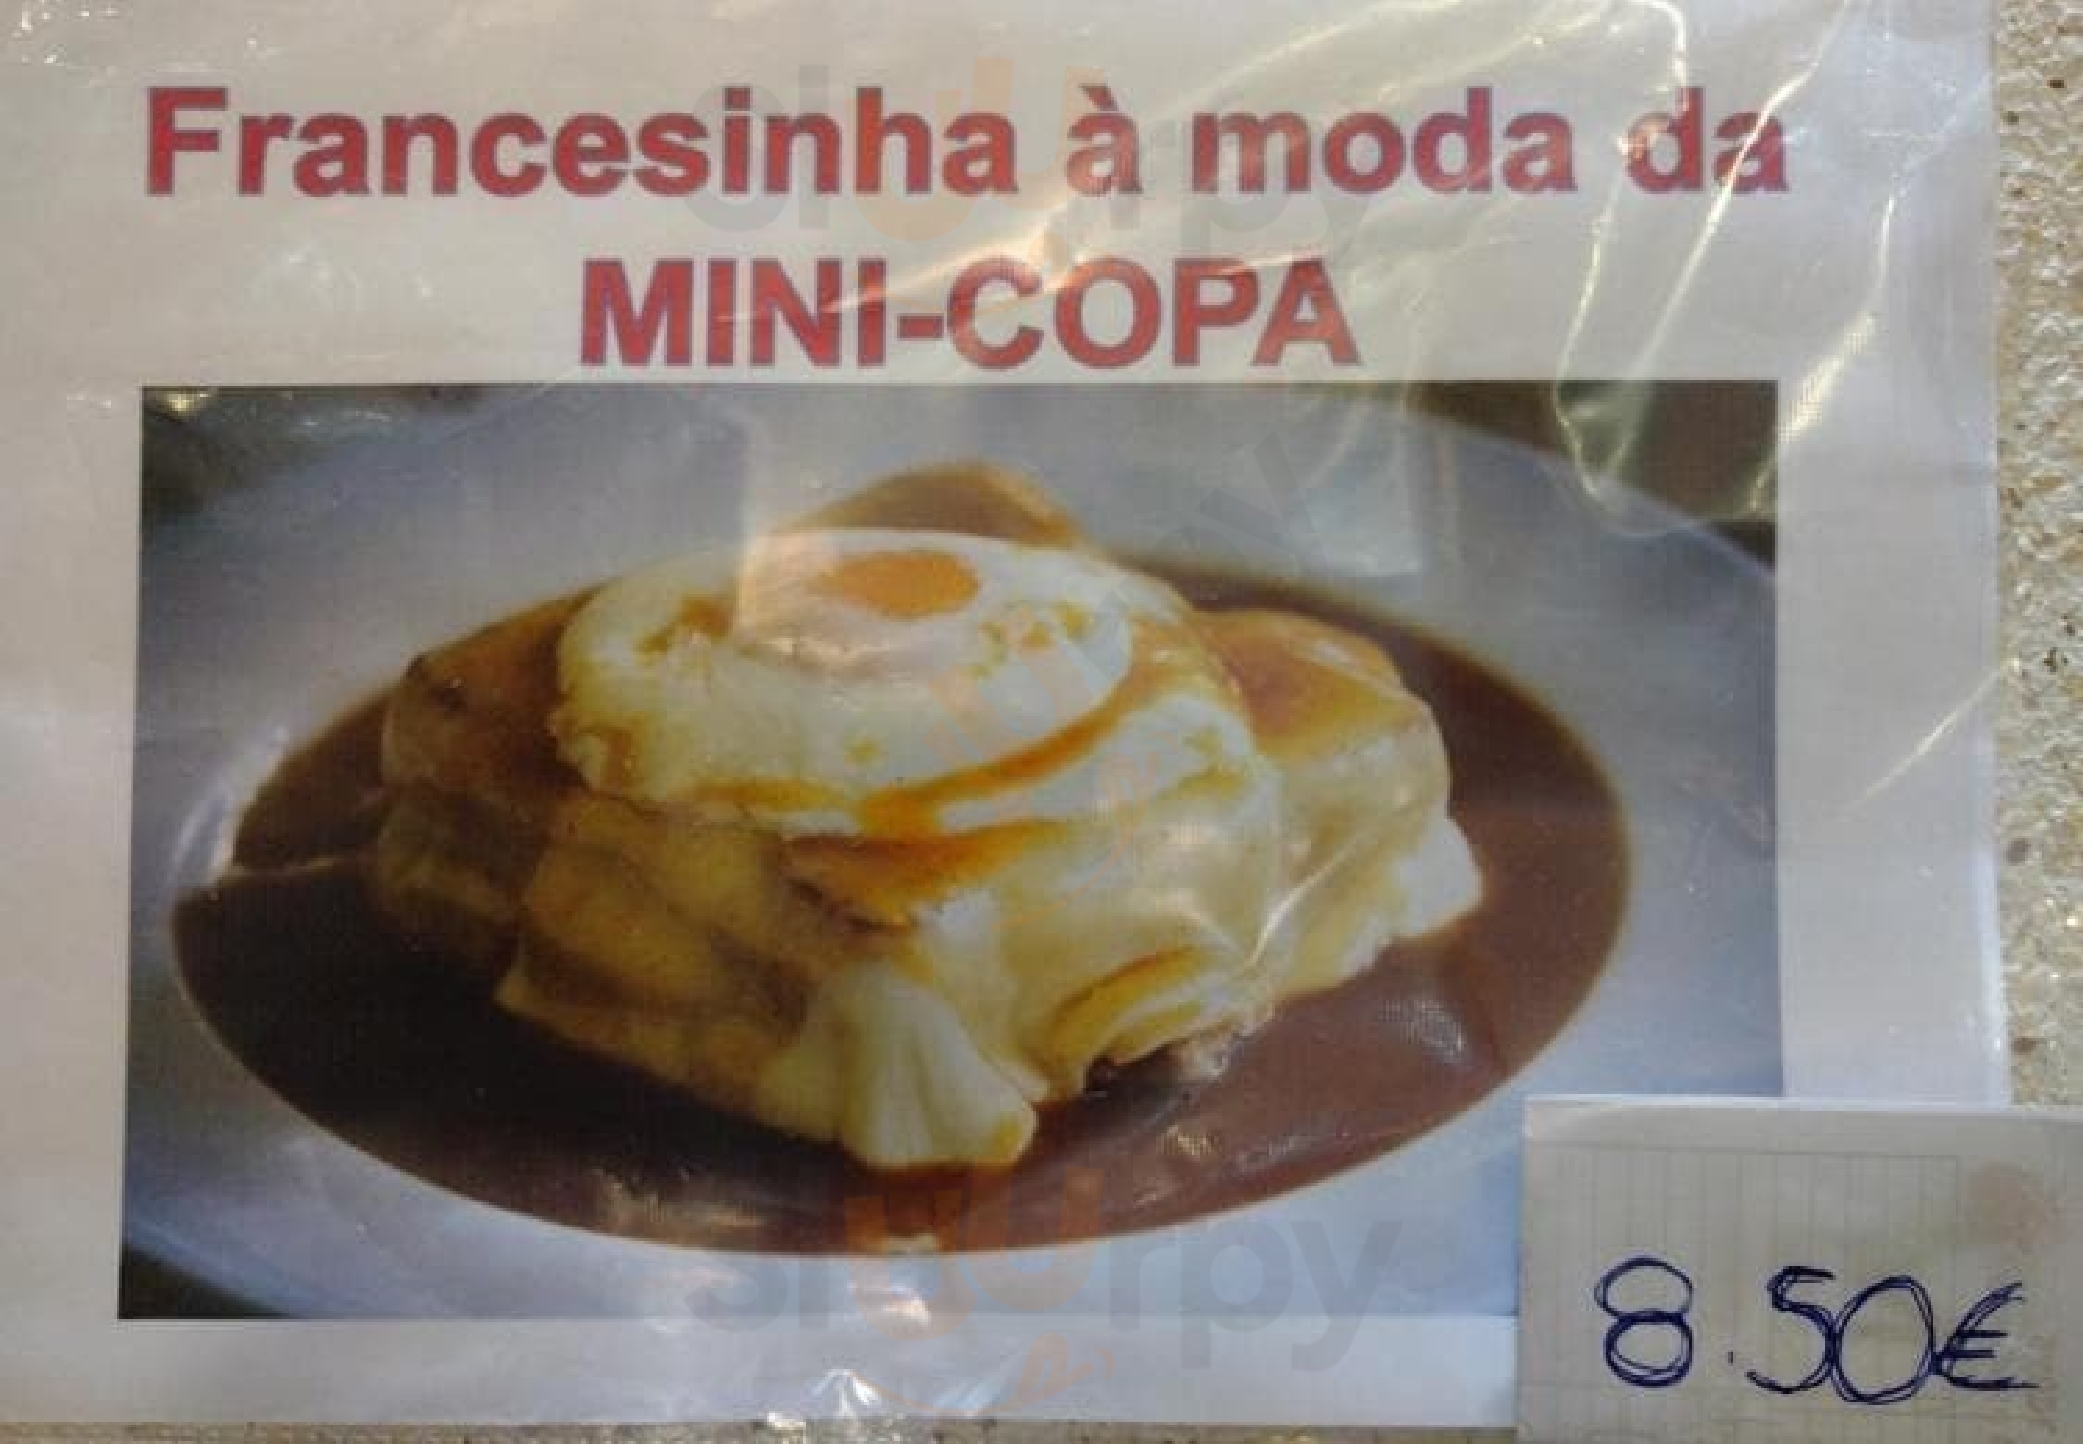 Pastelaria Mini Copa Lisboa Menu - 1